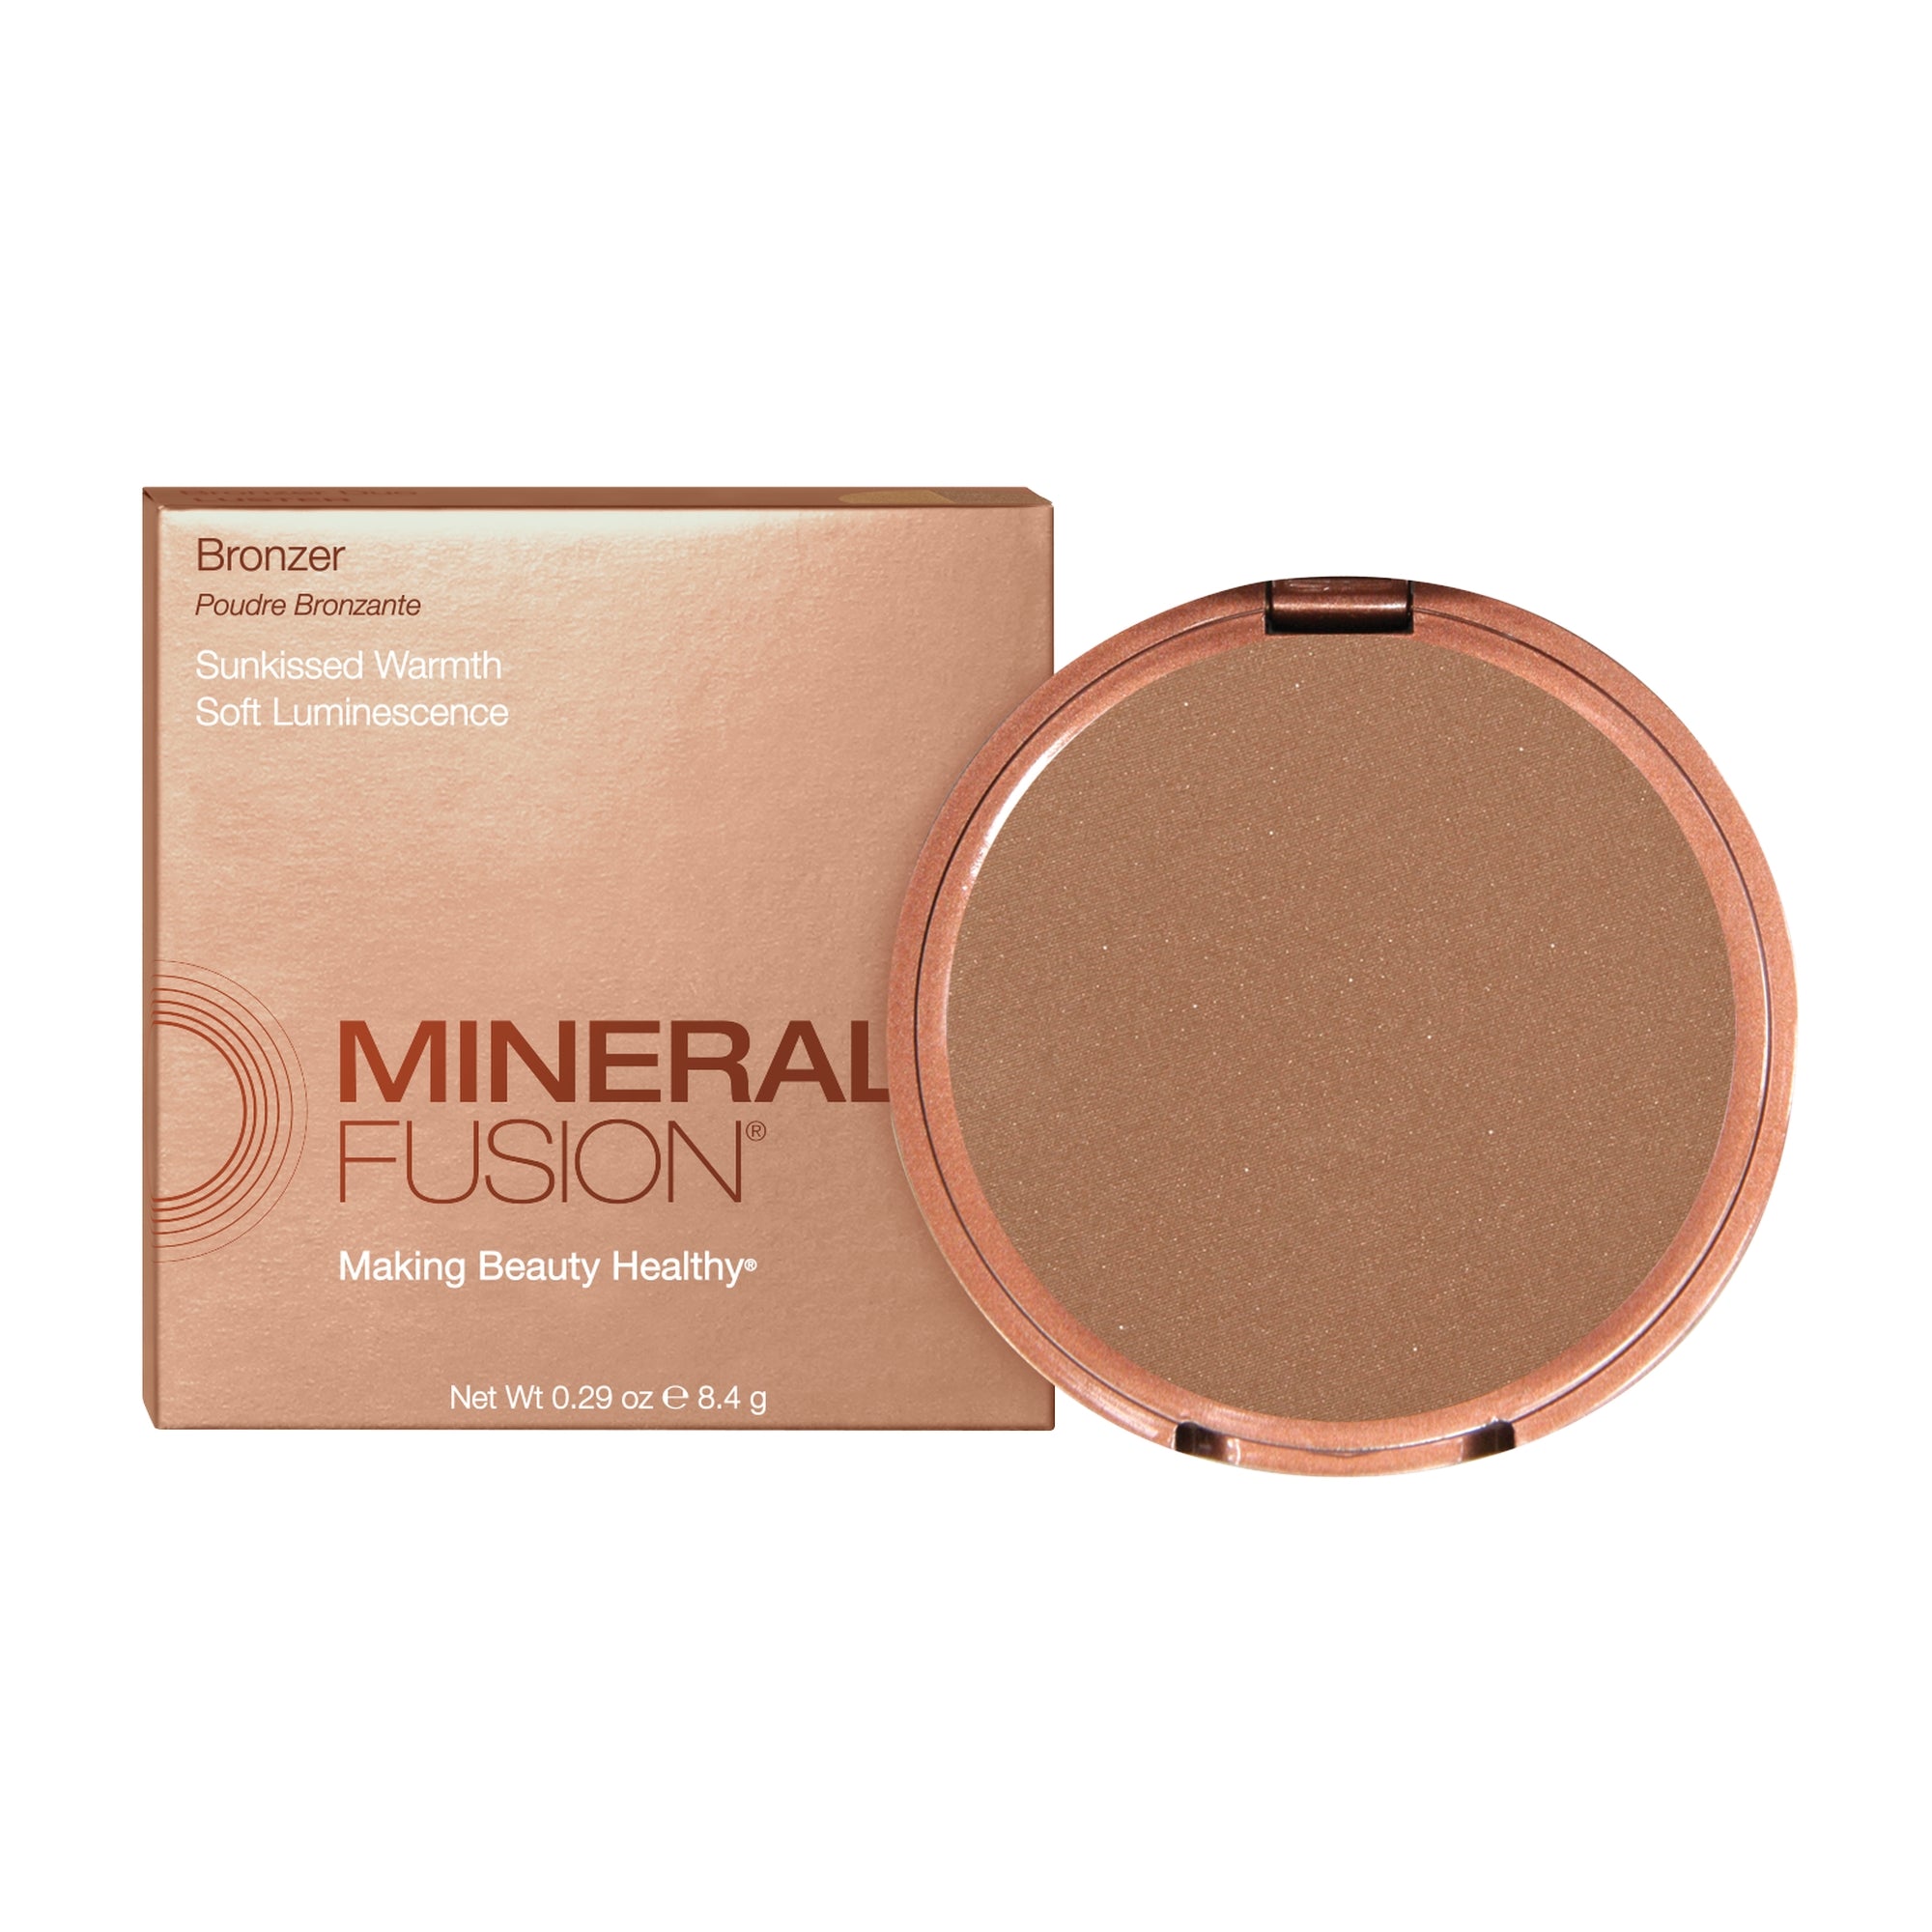 Bronzer - Mineral Fusion